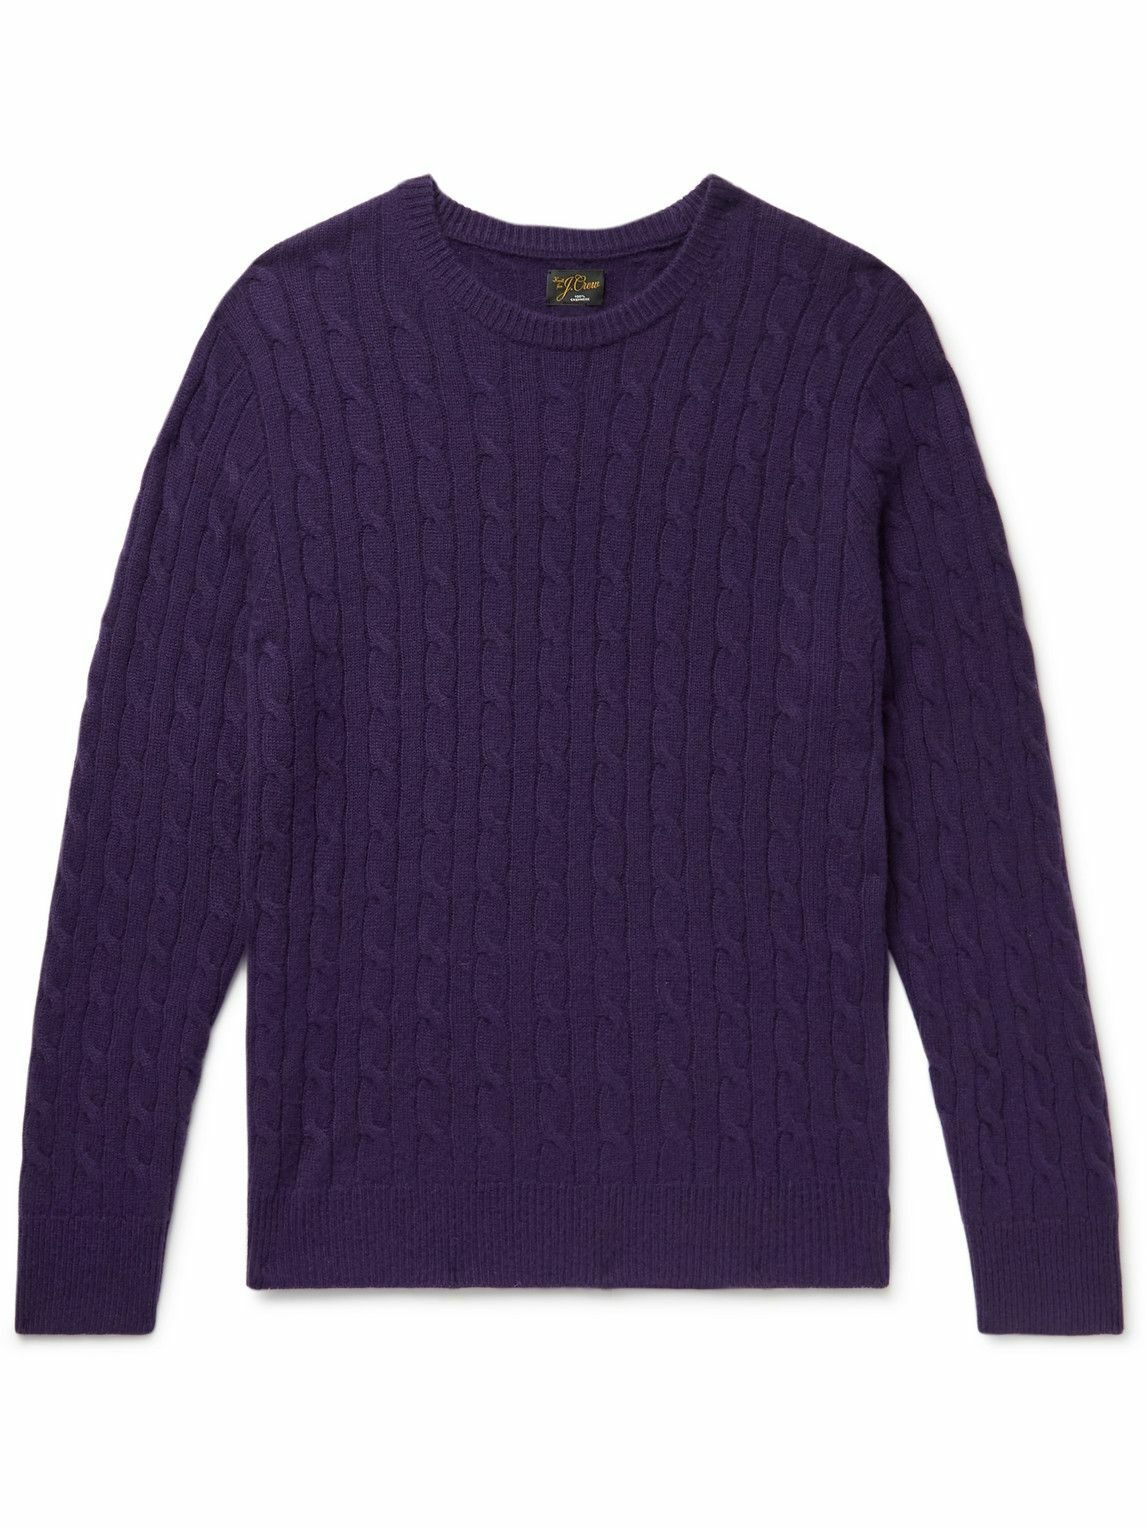 Photo: J.Crew - Slim-Fit Cable-Knit Cashmere Sweater - Purple